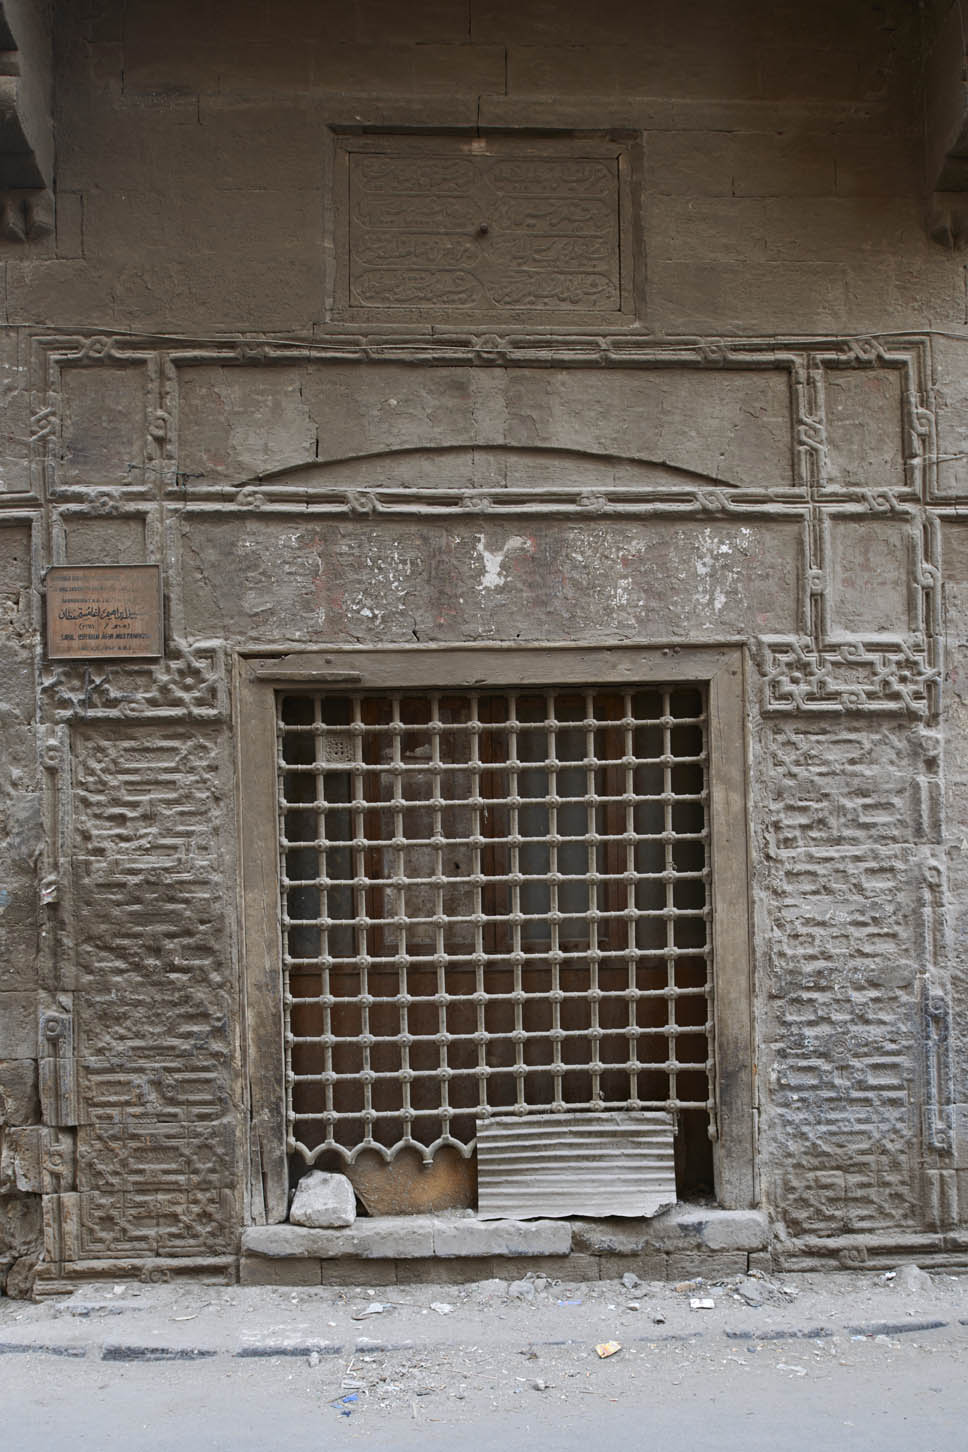 Detail of bronze window grille